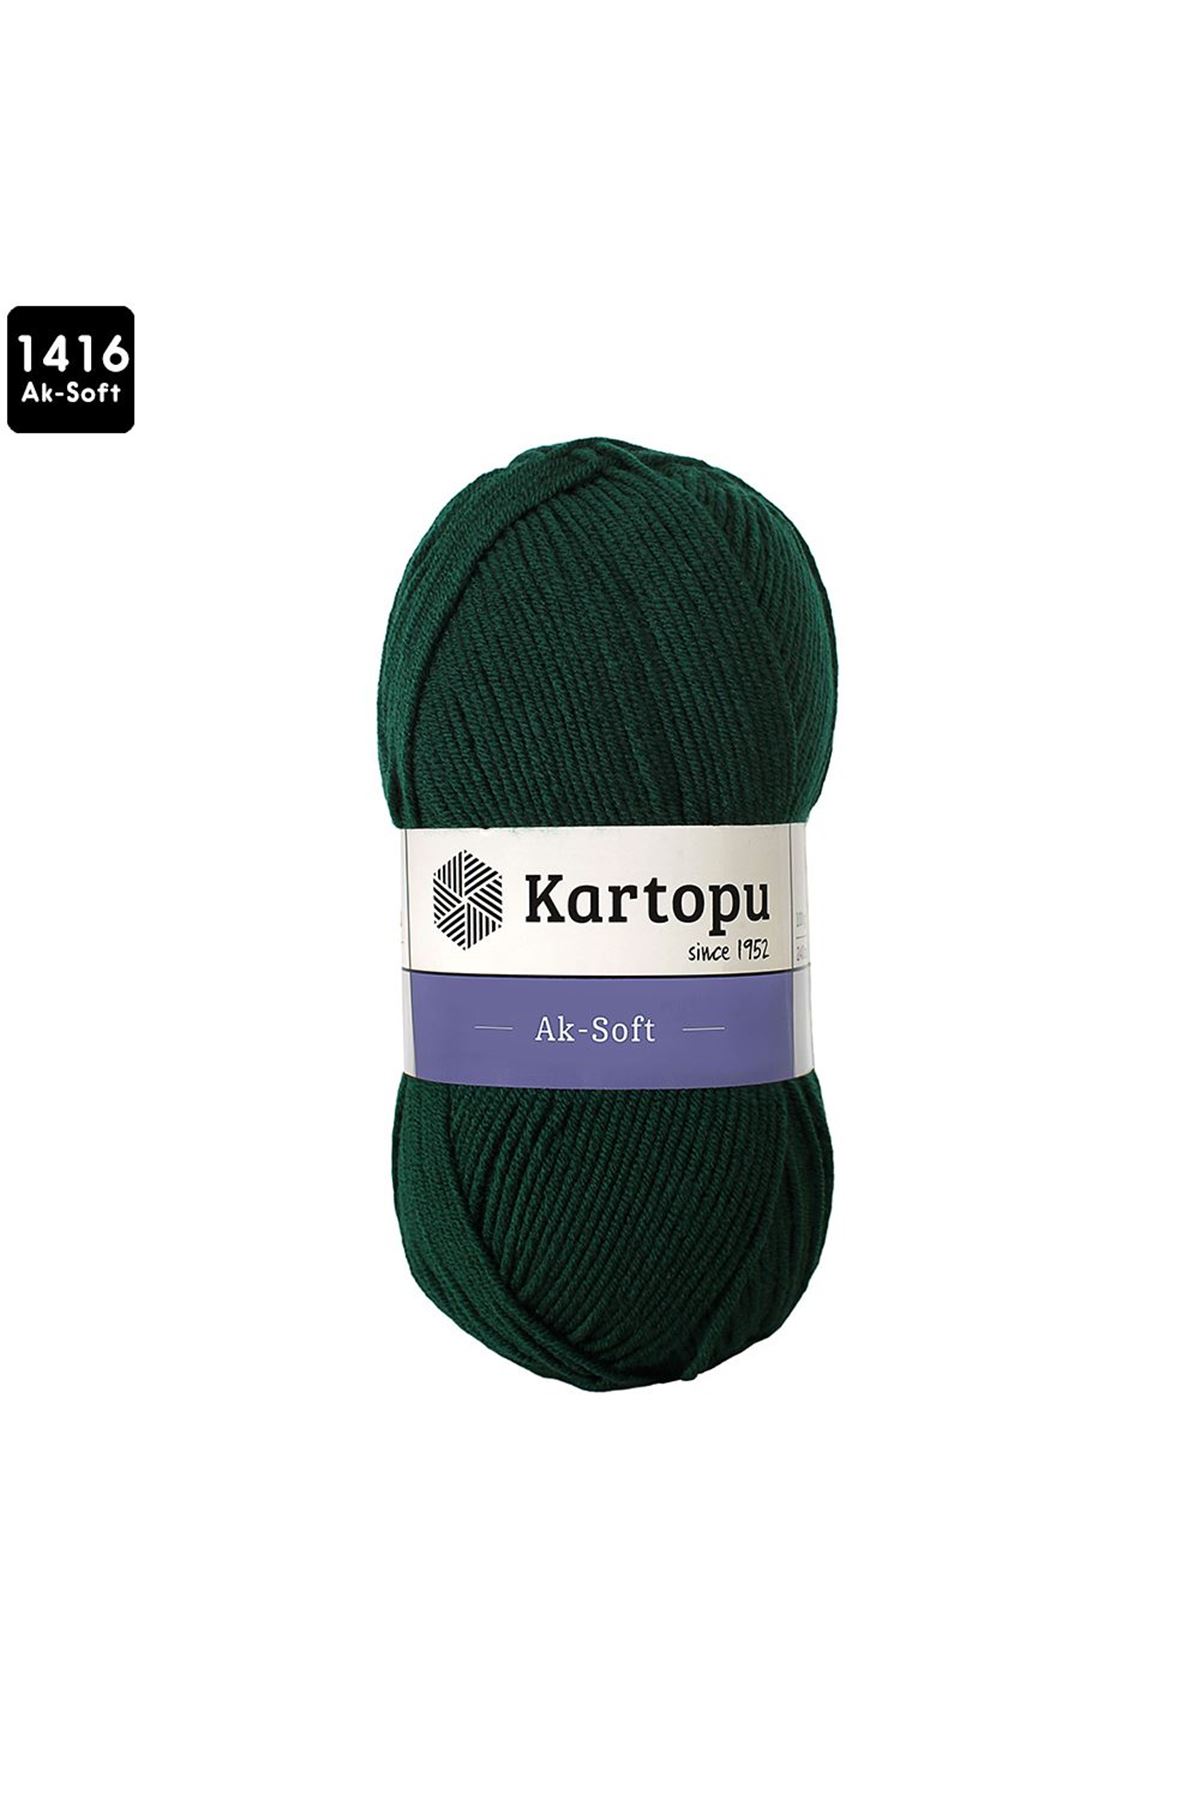 Kartopu Ak-Soft Renk No:1416